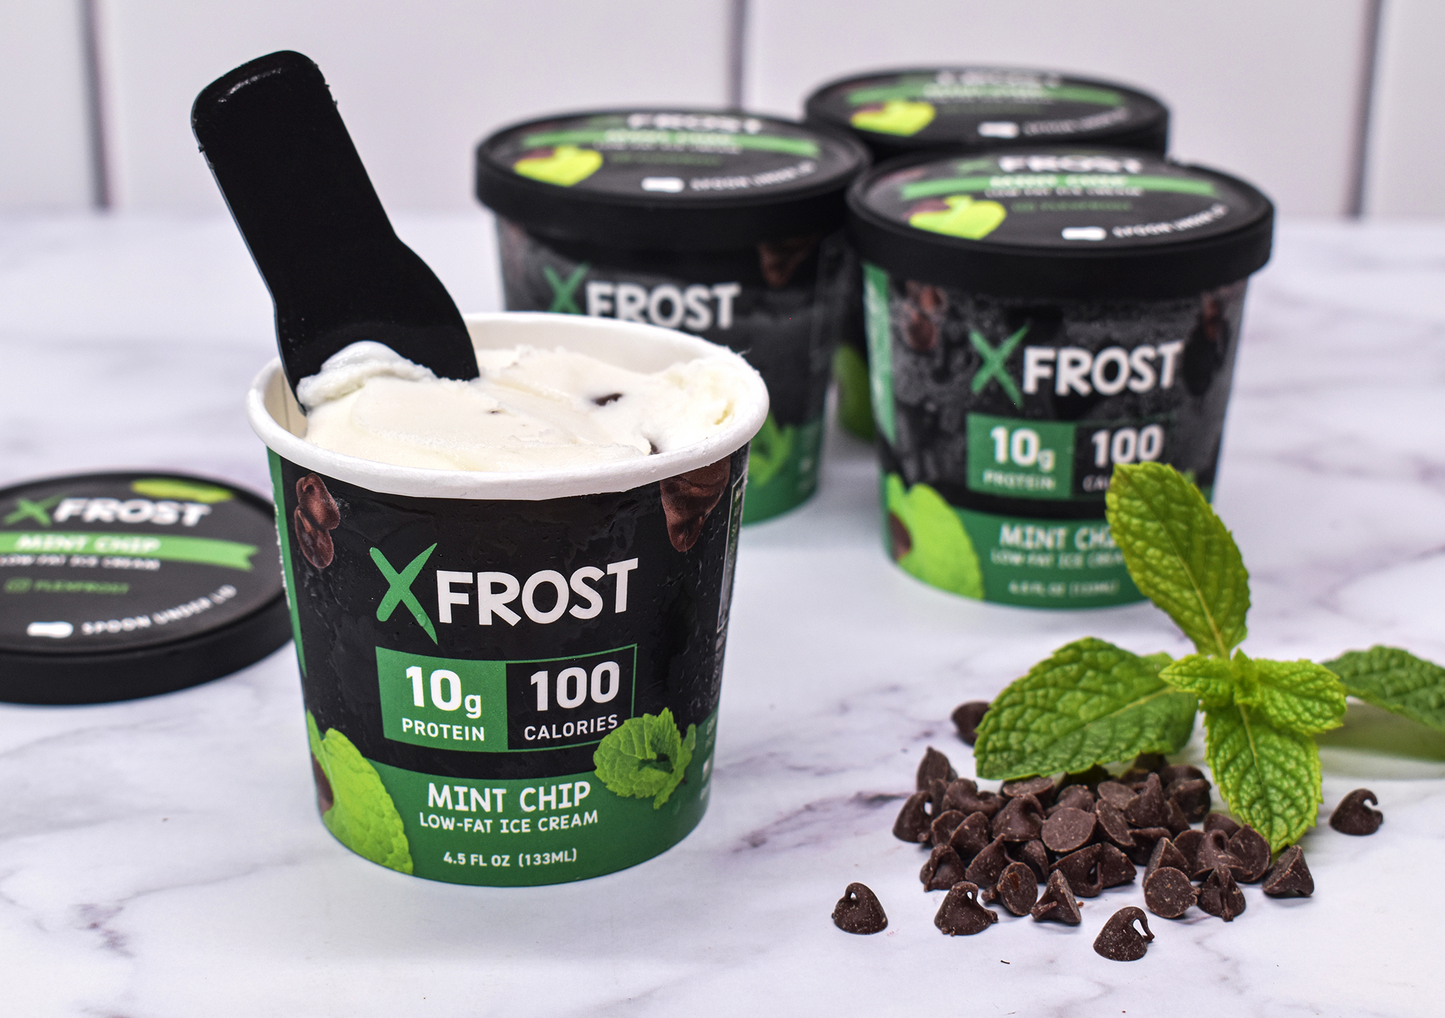 Xfrost - Protein Ice Cream